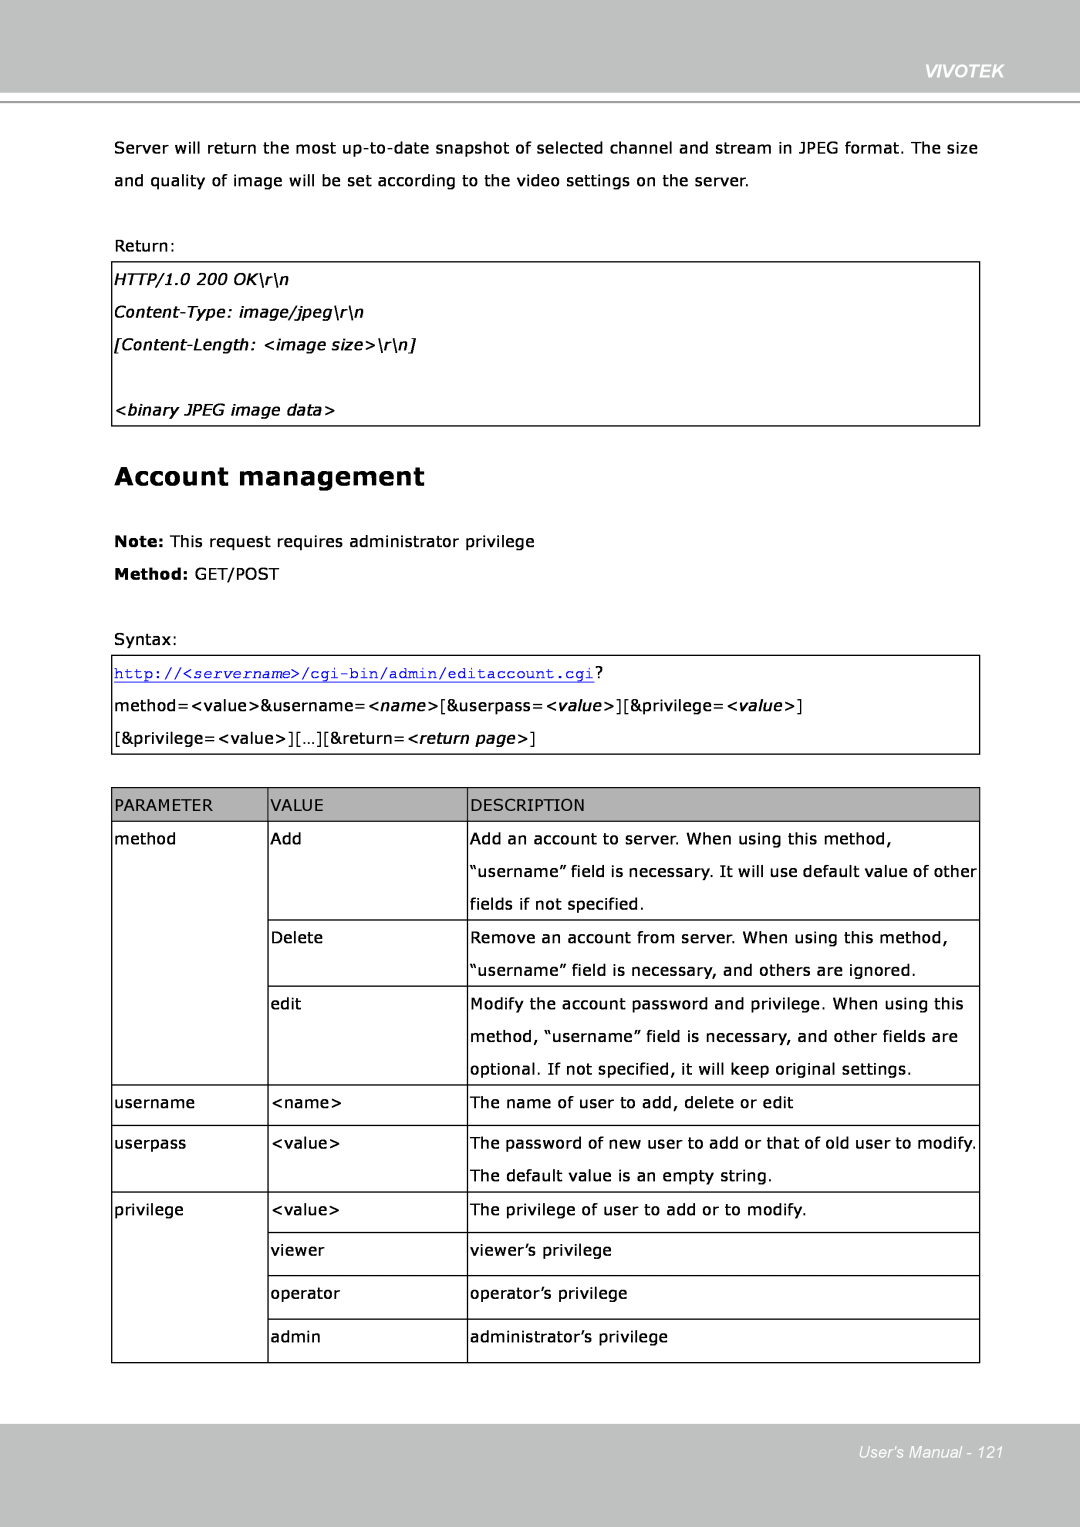 Vivotek PZ7132 manual Account management, Vivotek, binary JPEG image data, Method GET/POST, Users Manual 